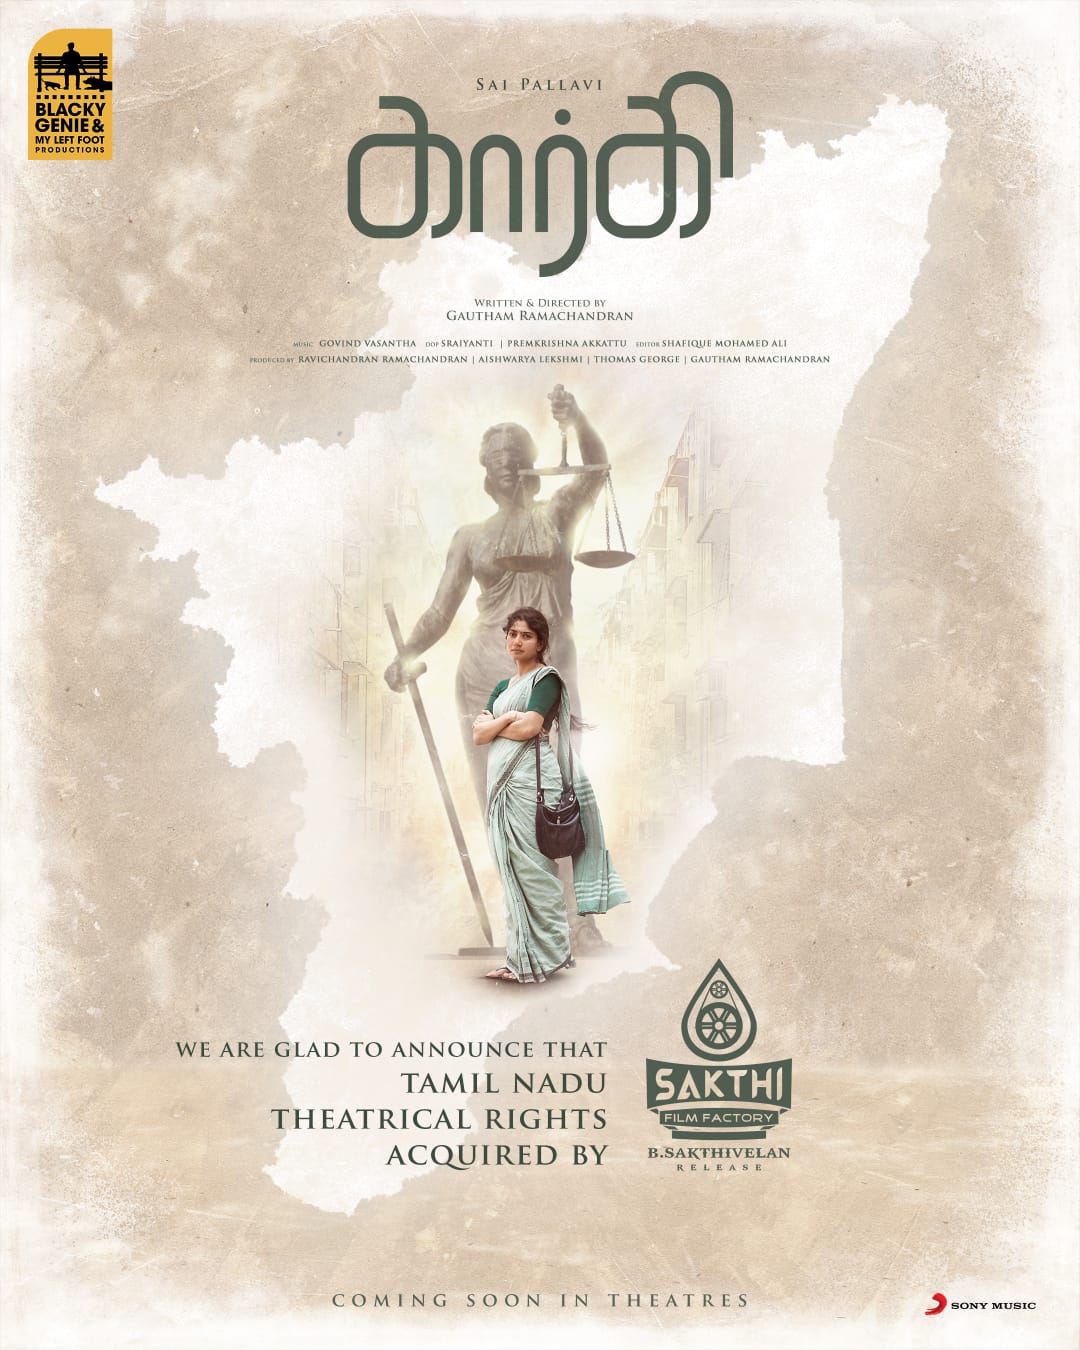 Sai Pallavi Gargi Movie Tamilnadu Theatrical Rights Bagged by Sakthi film factory